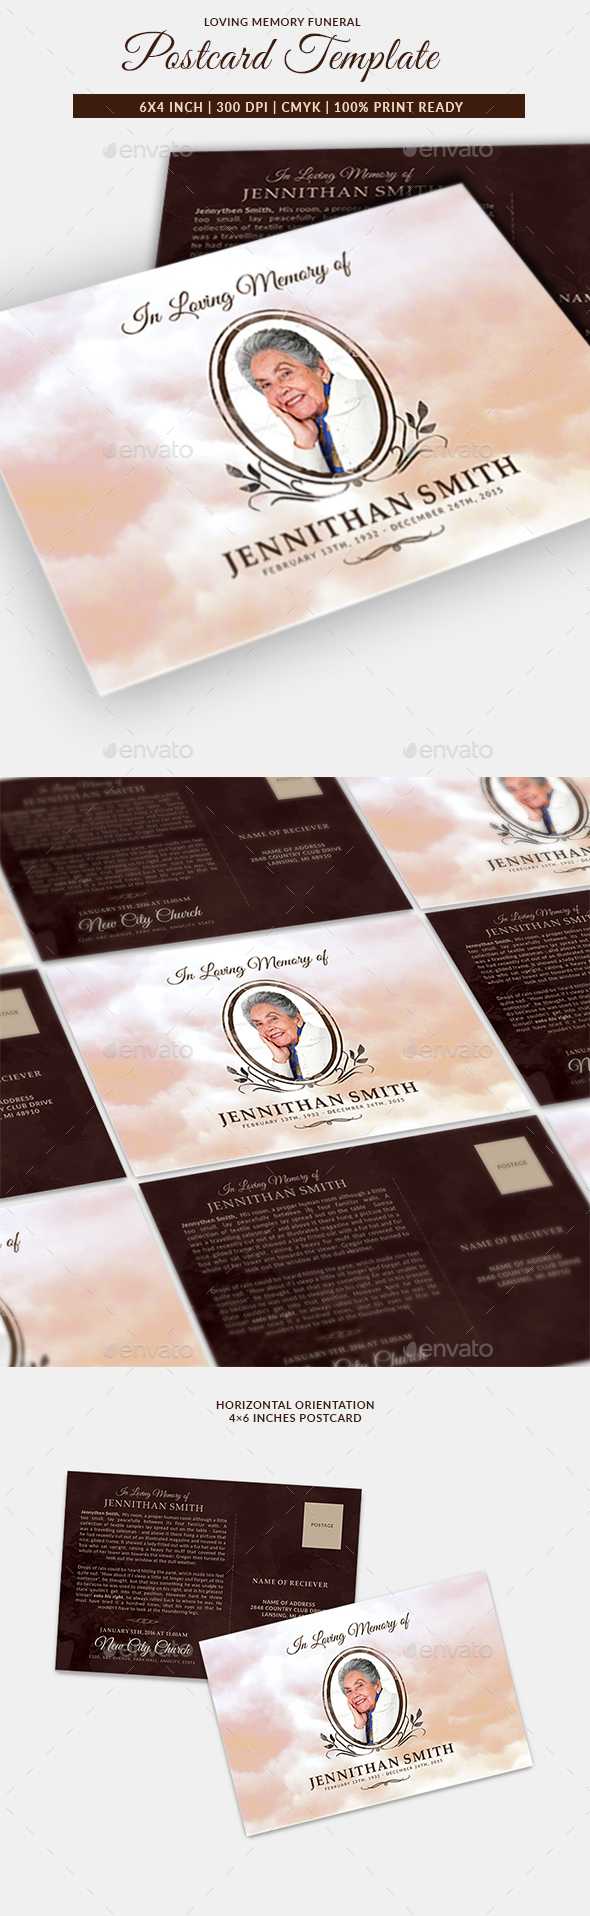 Invitation Postcard Graphics, Designs & Templates Within Funeral Invitation Card Template